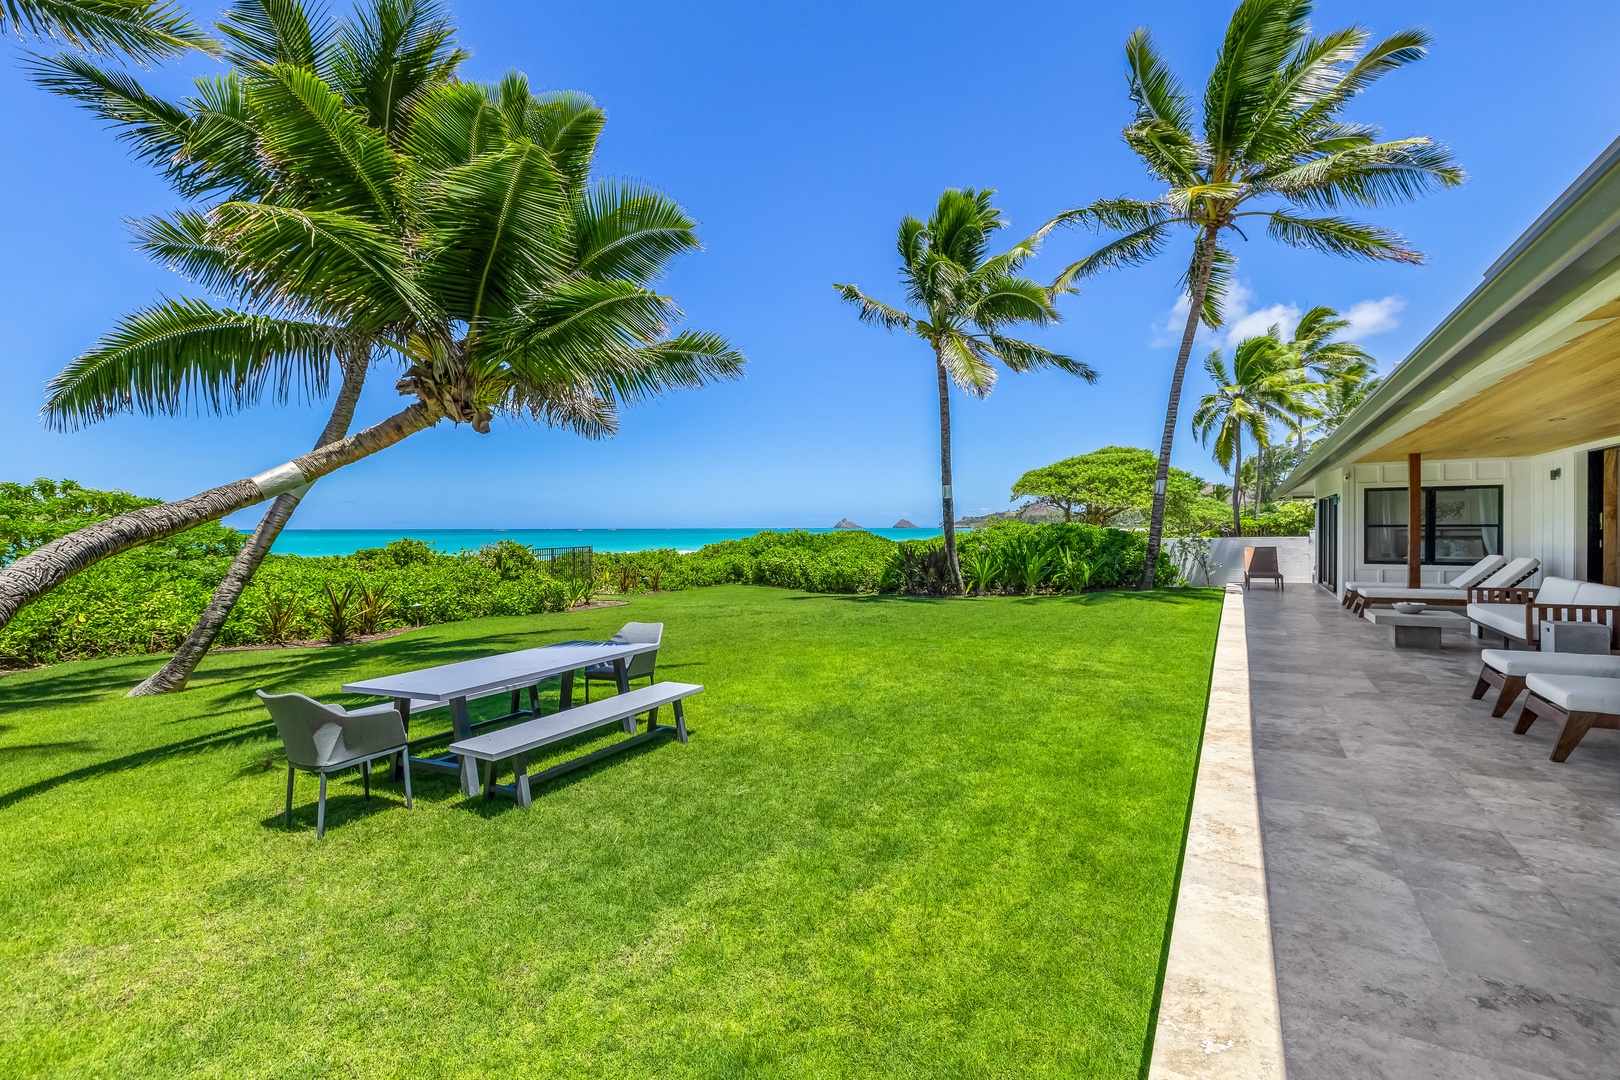 Kailua Vacation Rentals, Kailua Beach Villa - Back yard views